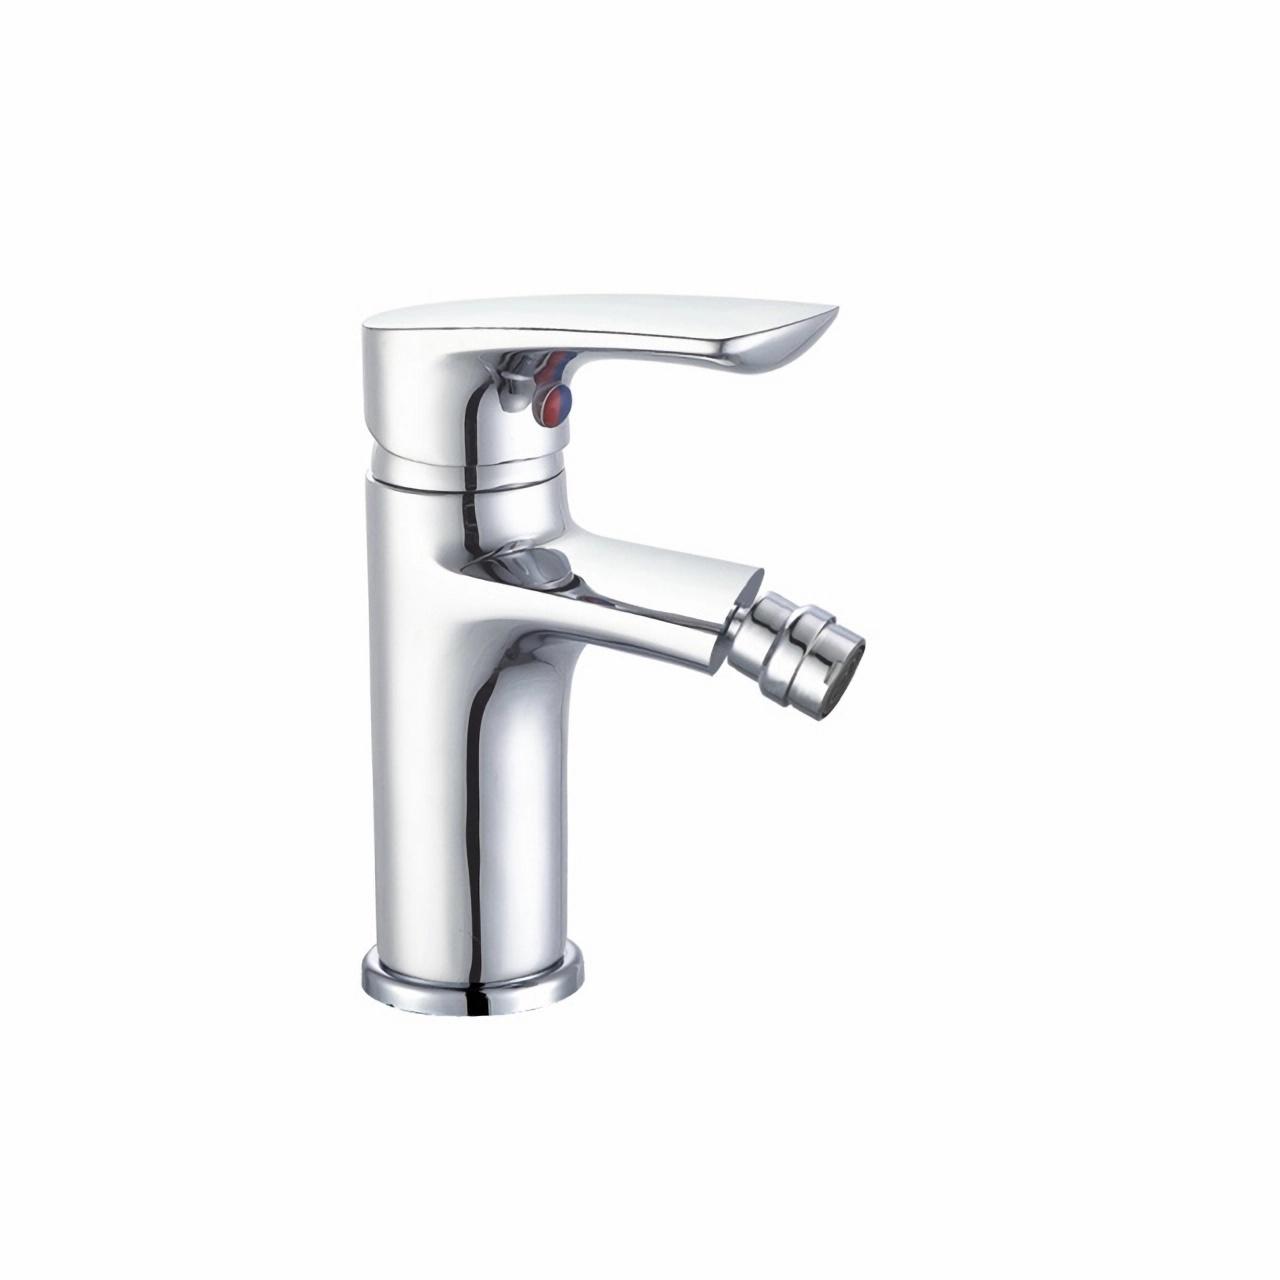 OJ-J0182H Single Handle Chrome Polished Lavatory Vanity Vessel Sink Faucets One Hole Deck Mount Brass Basin Faucet